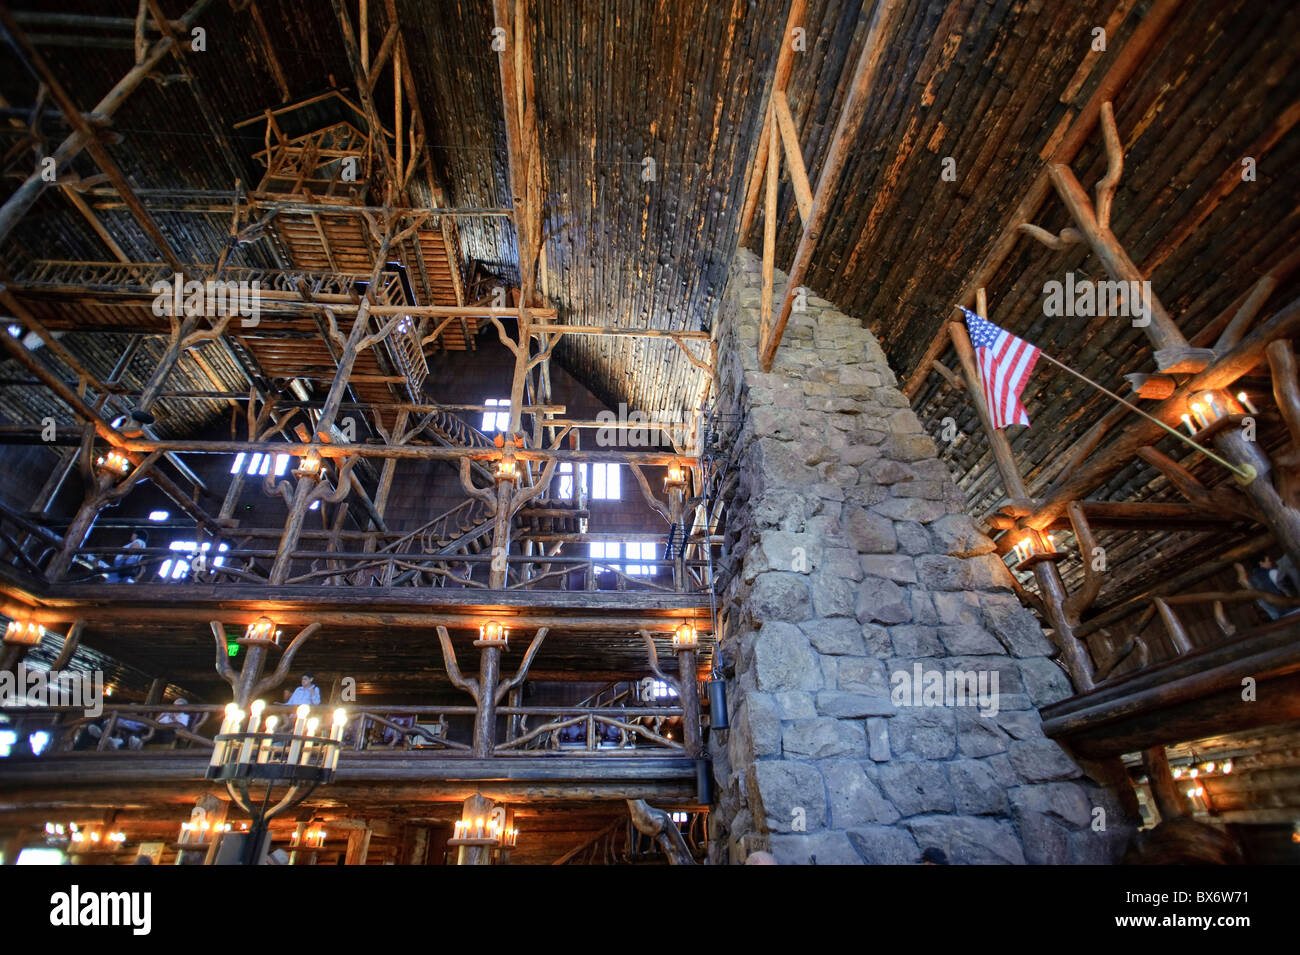 Inside the Old Faithful Lodge, Yellowstone National Park. Wyoming, USA  Stock Photo - Alamy